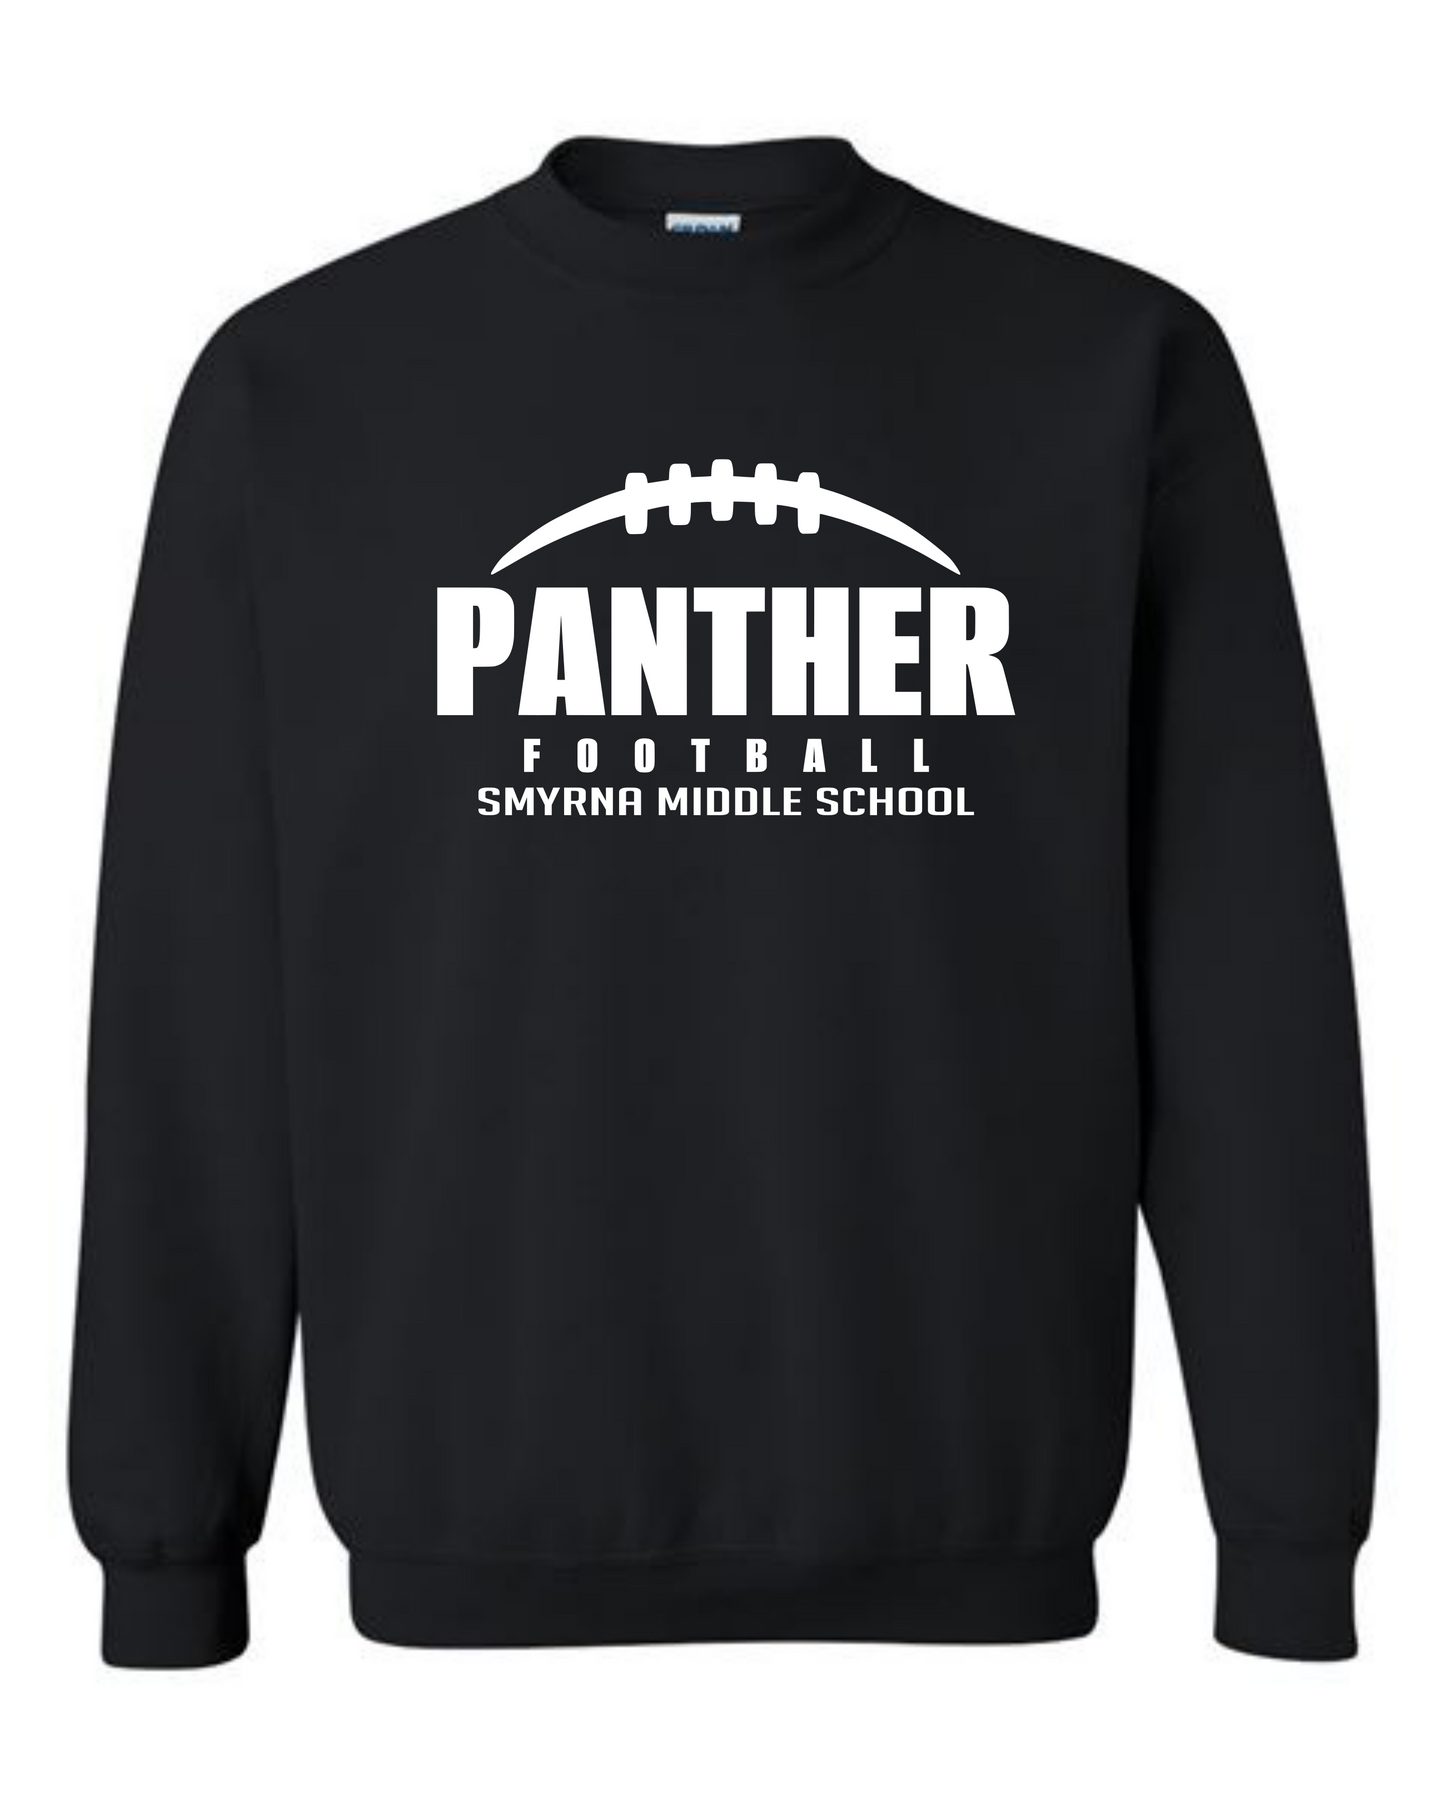 Panther Football Sweatshirt